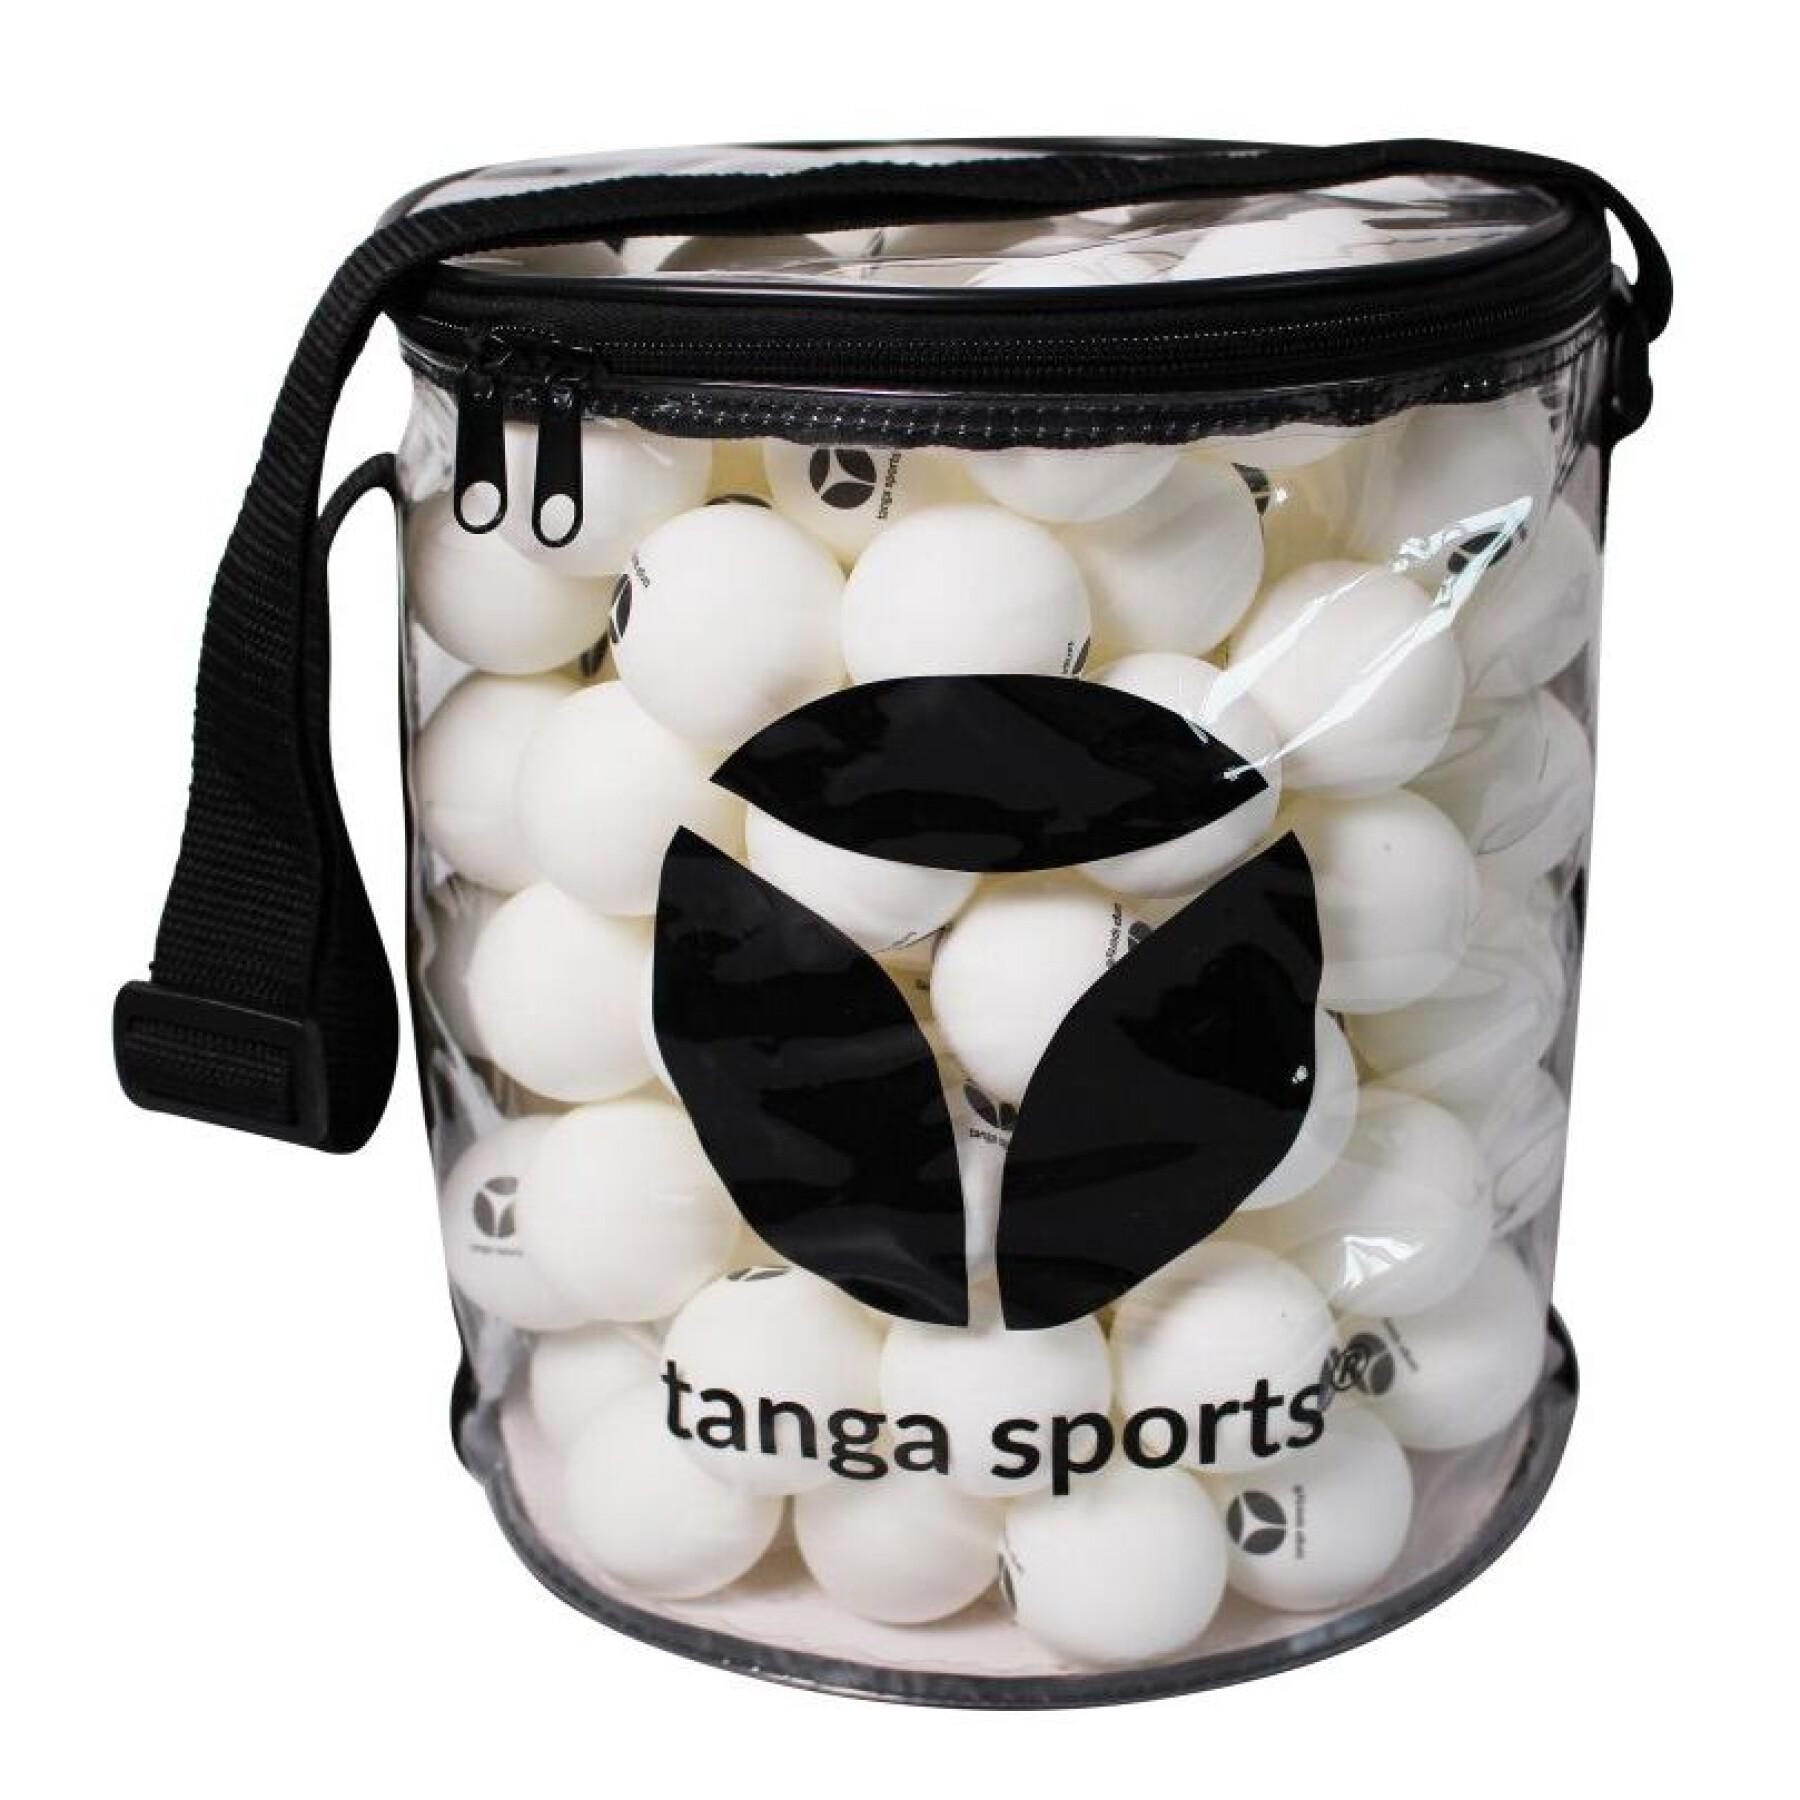 Conjunto de 144 bolas de ténis de mesa Tanga sports